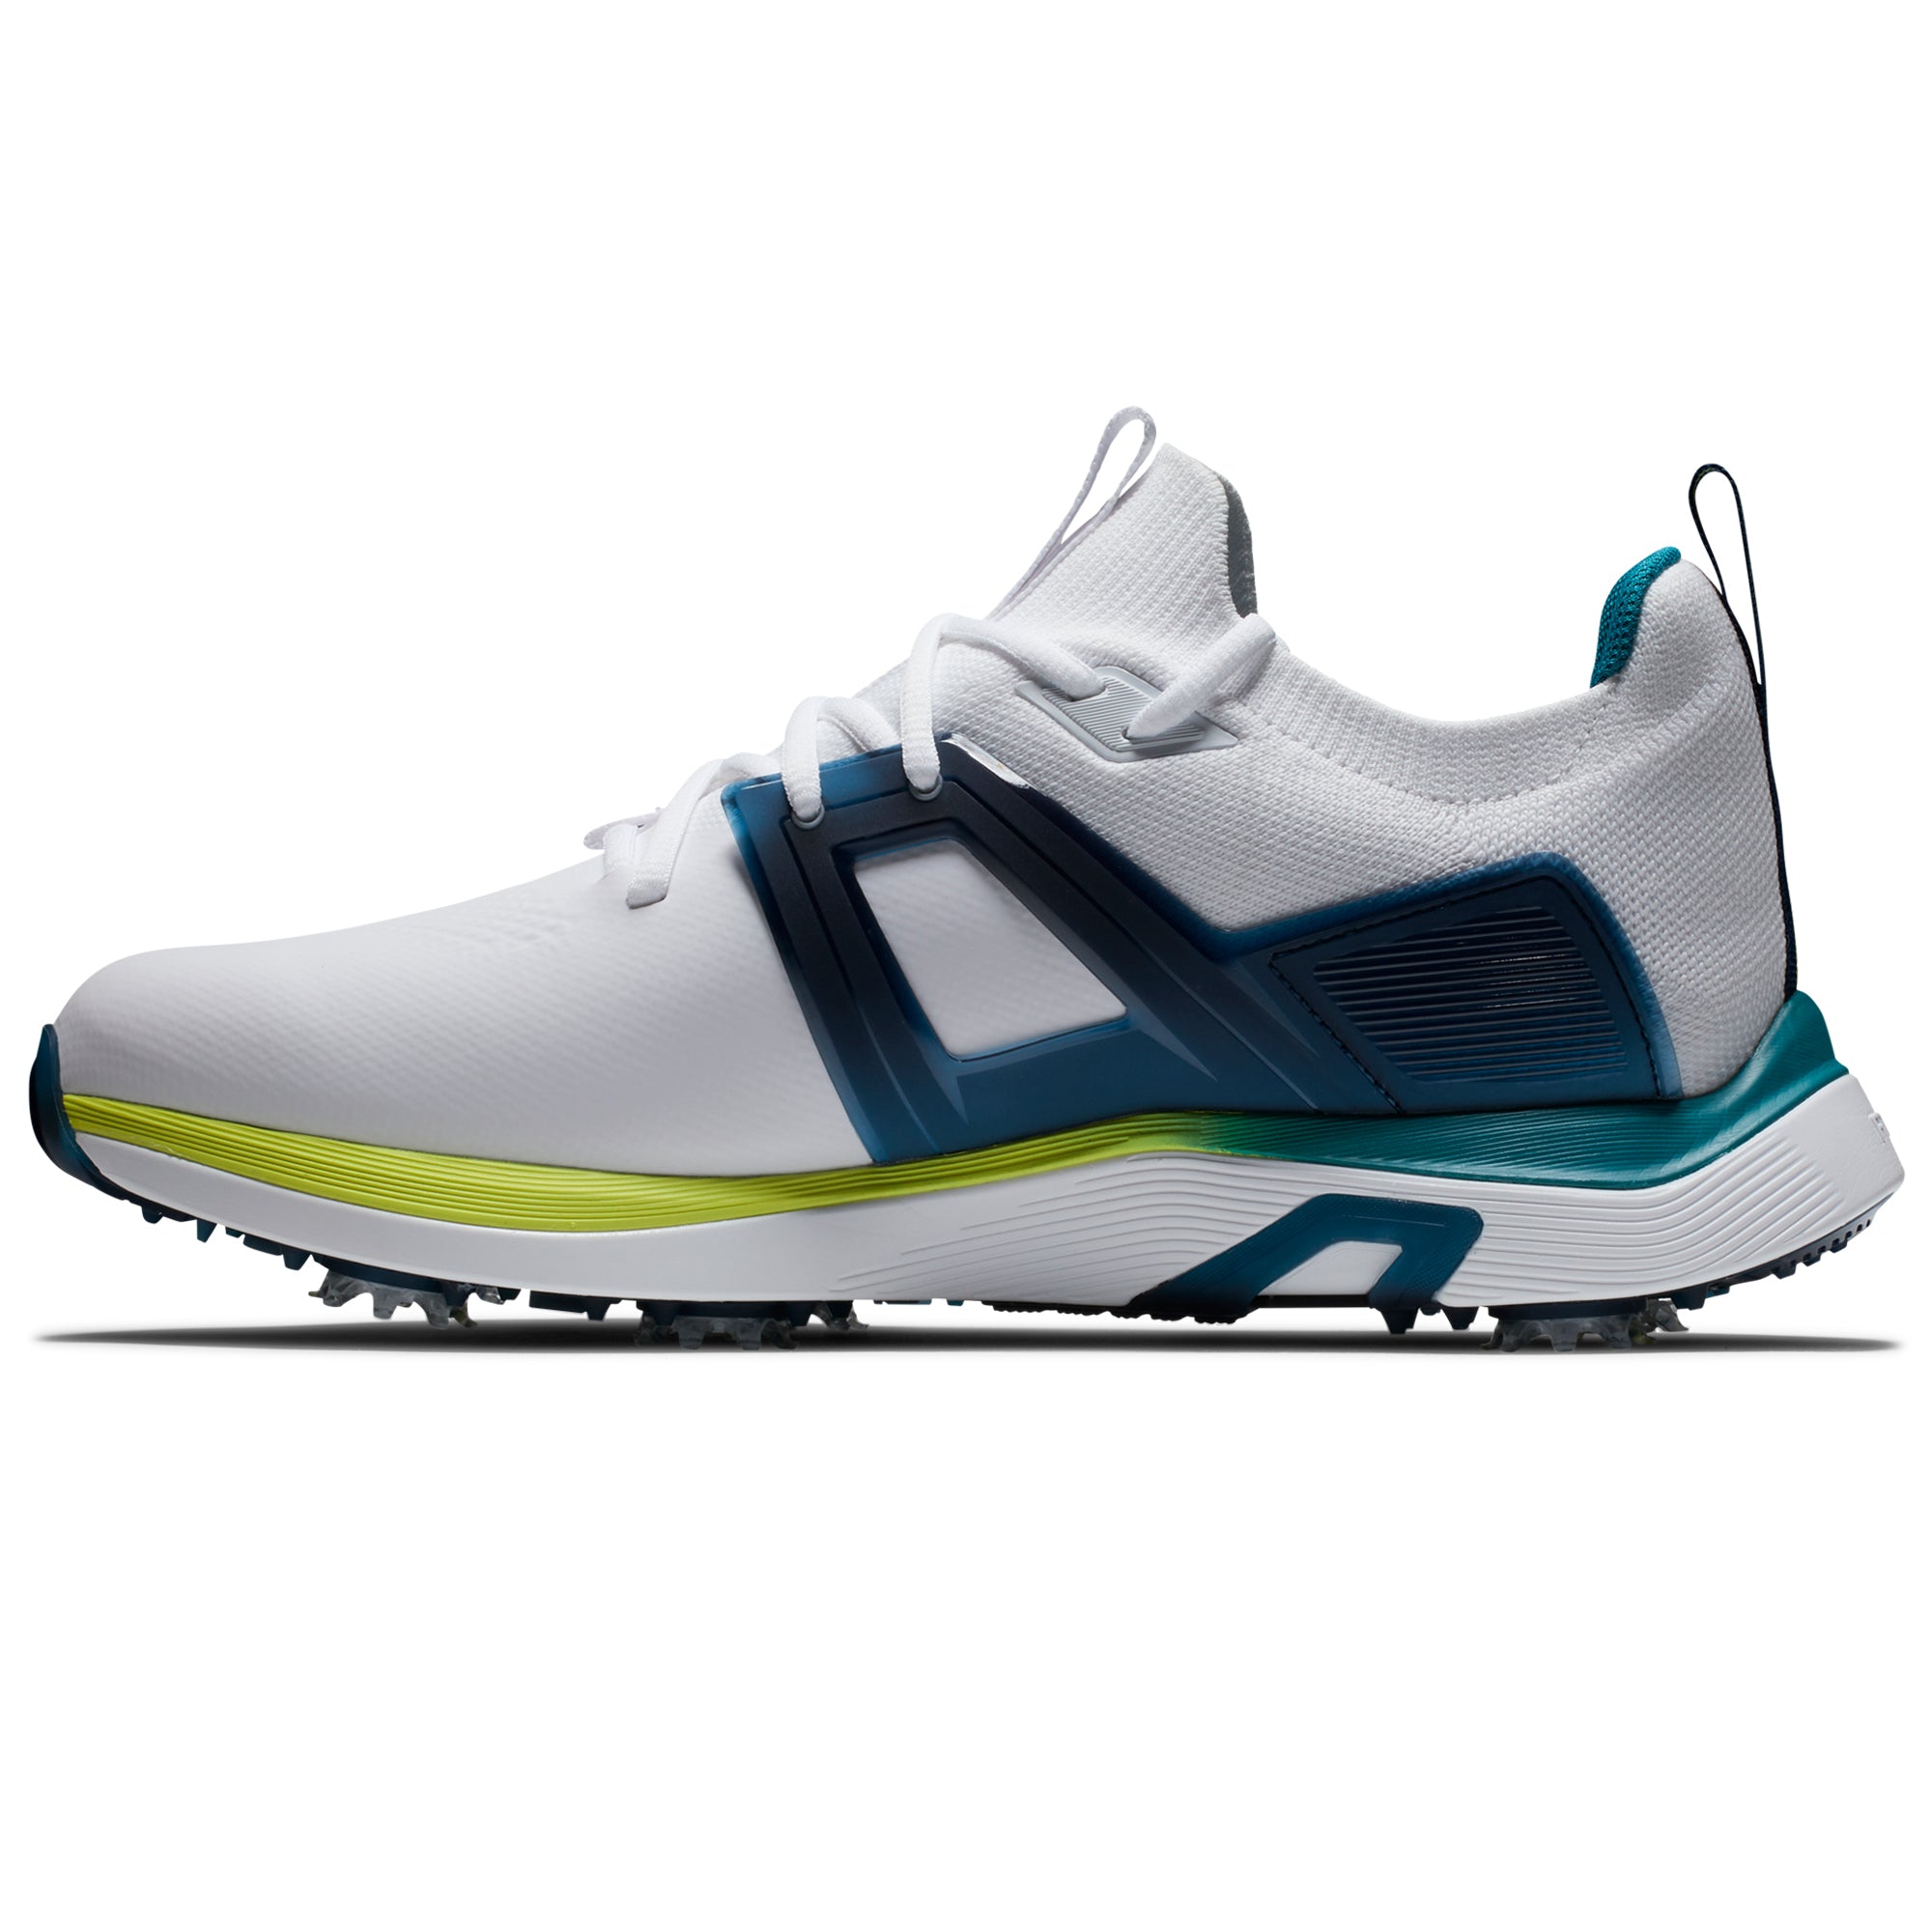 footjoy-hyperflex-golf-shoes-51075-white-lime-navy